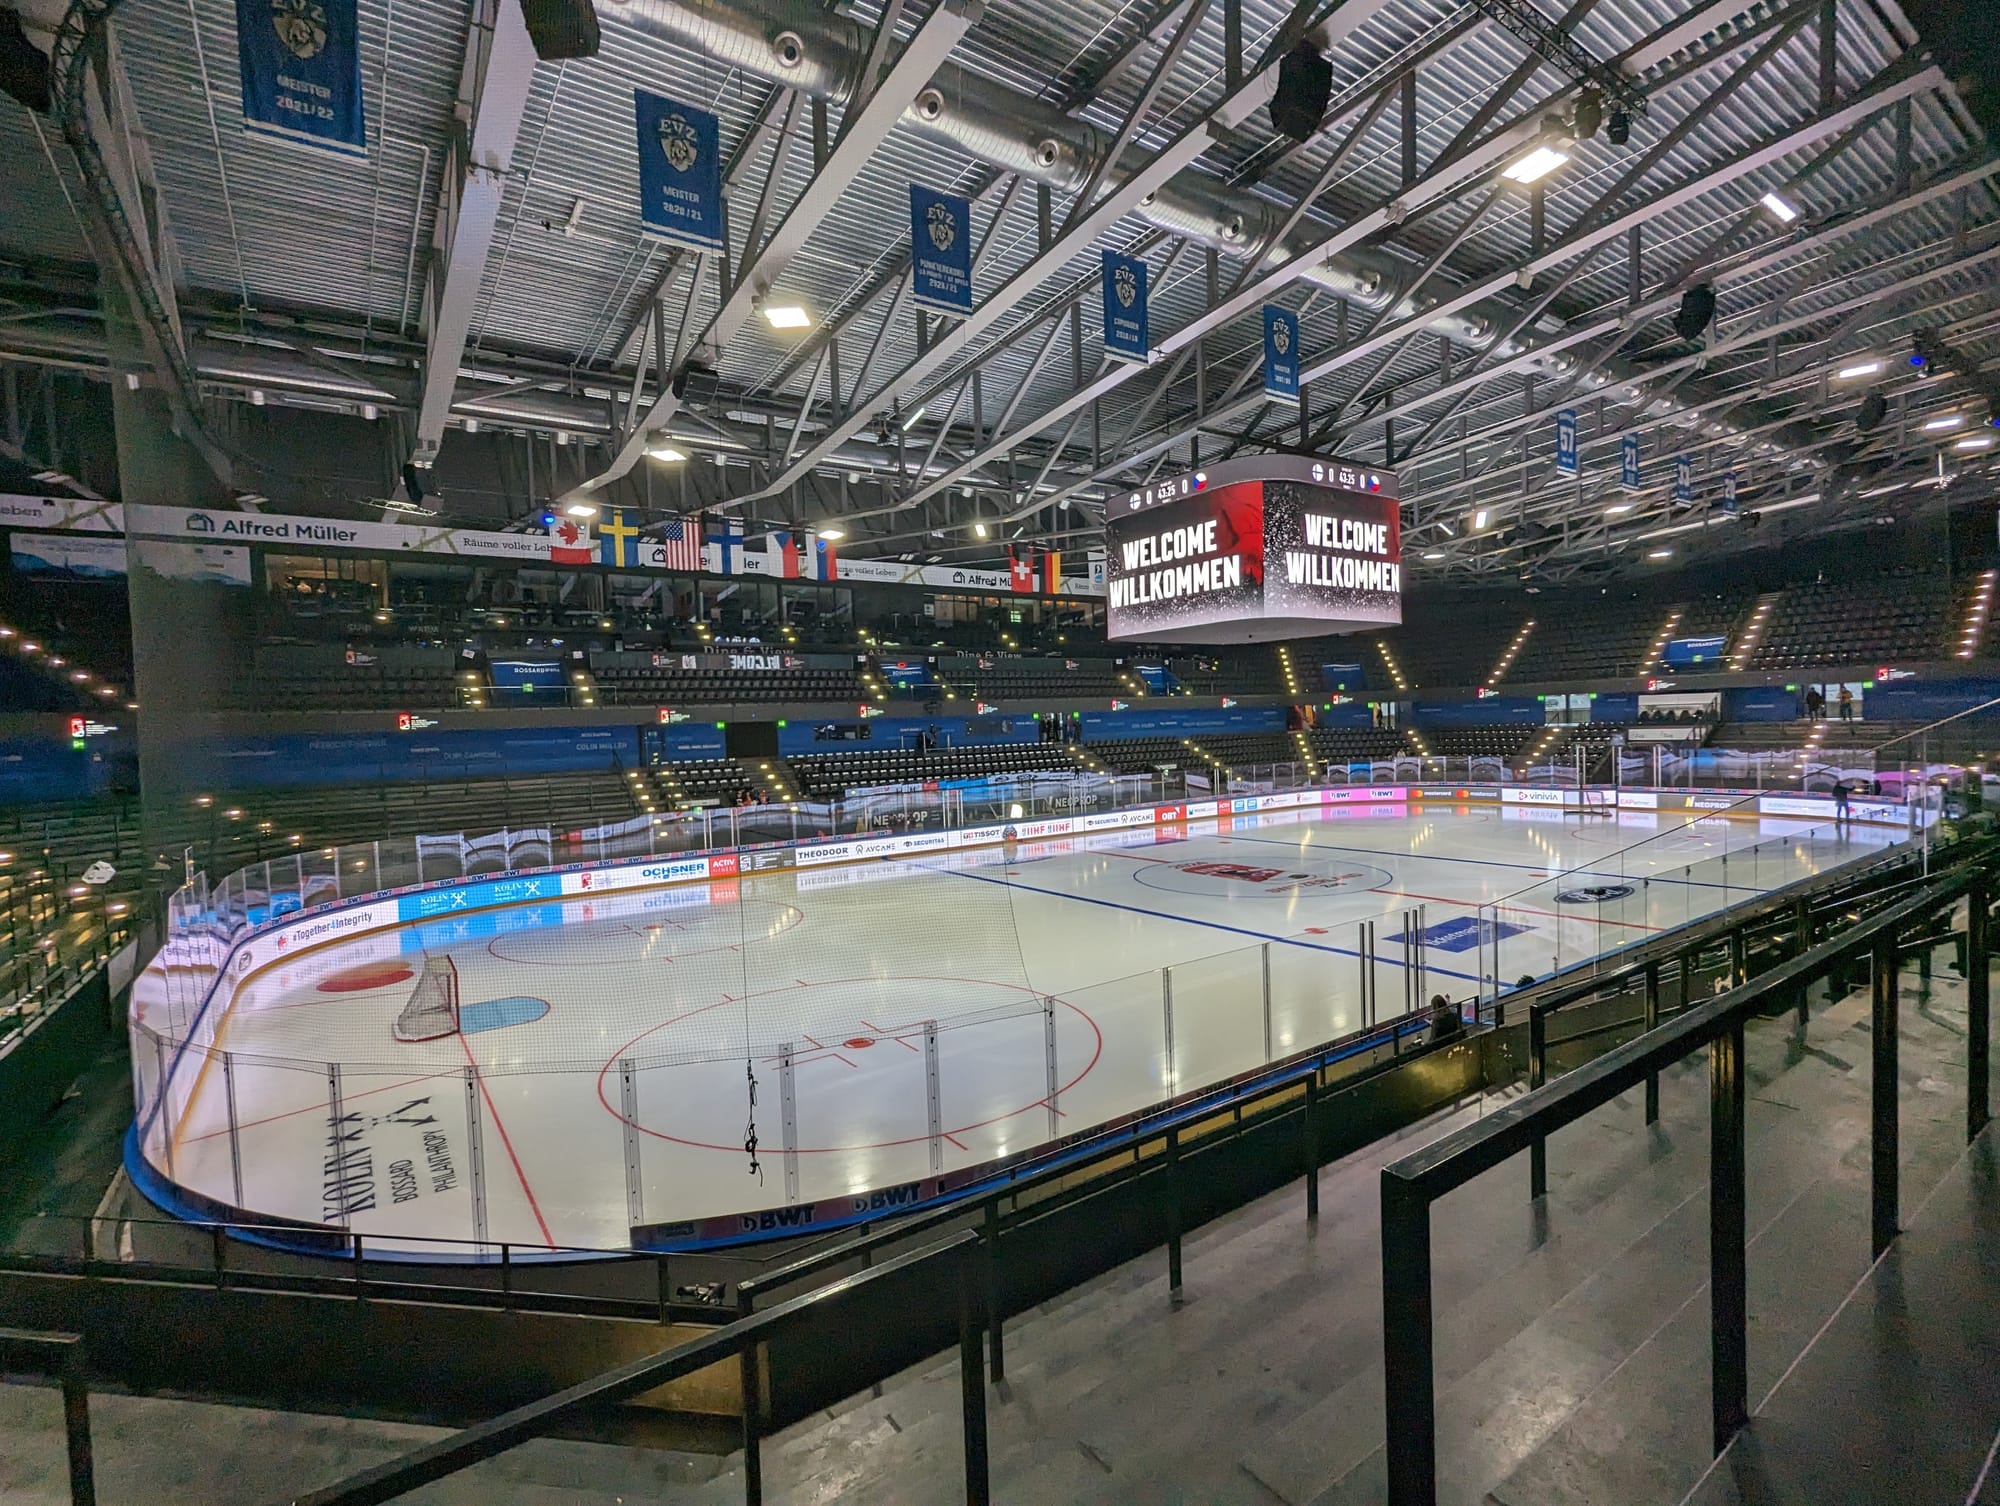 January 8 and 9 - IIHF U18 Women's World Championship: Postgame Videos